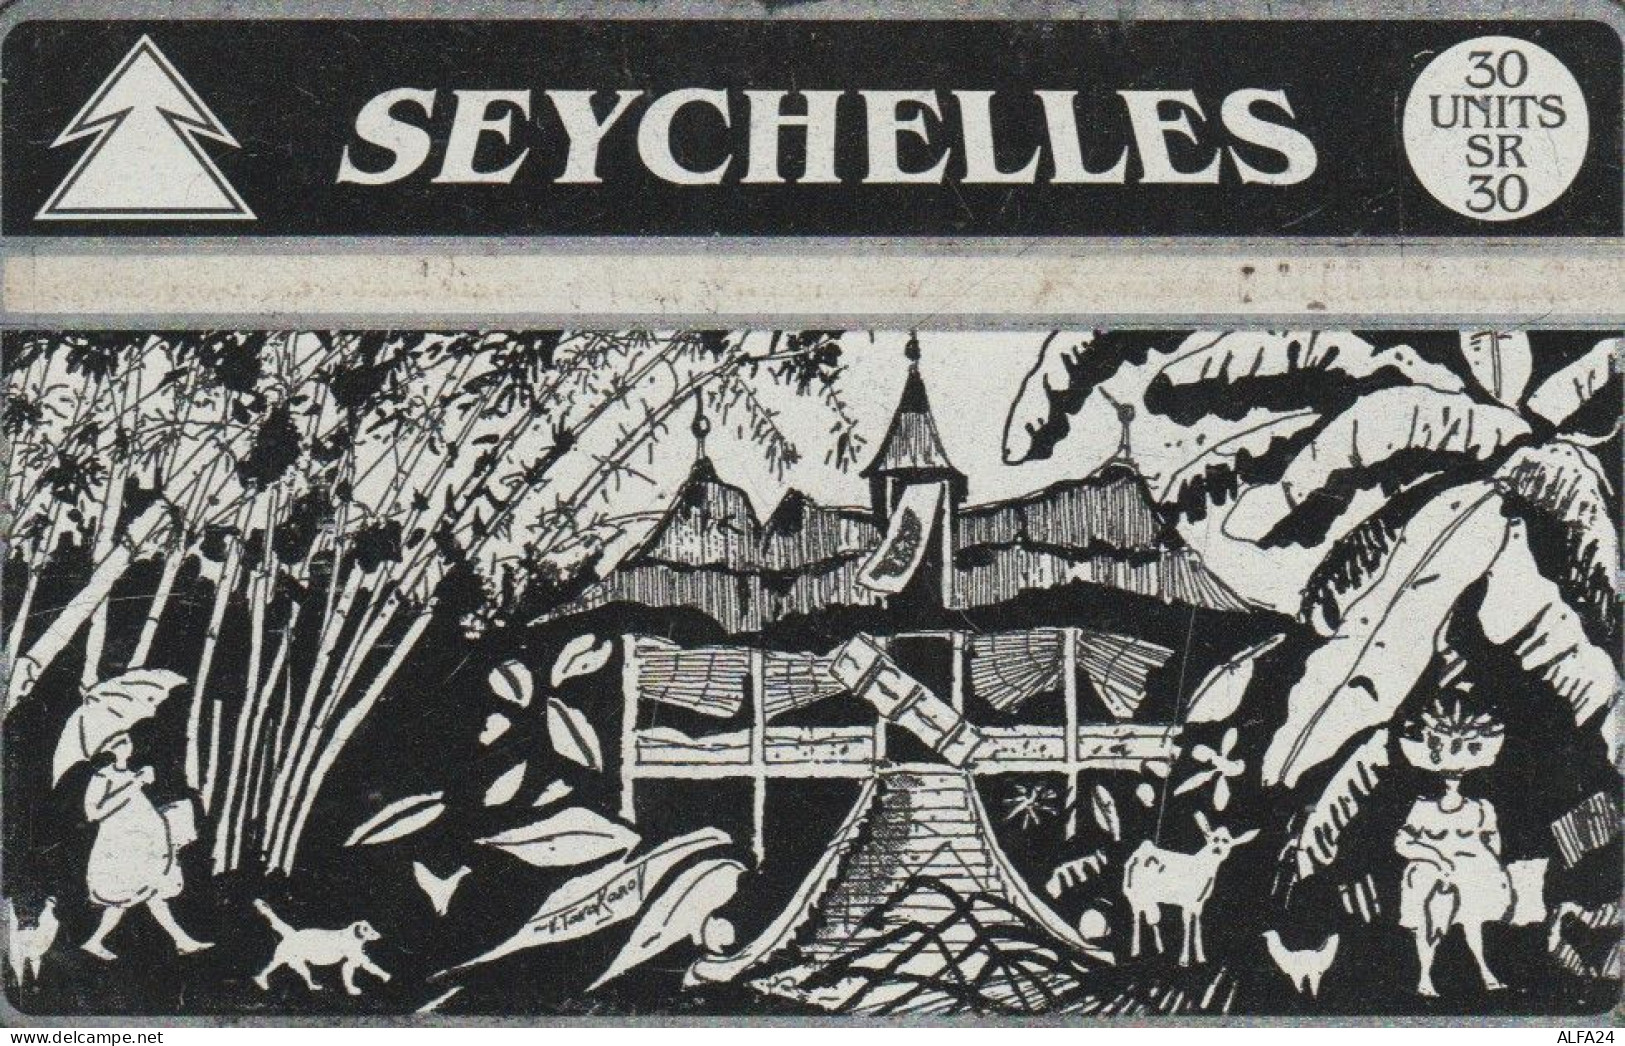 PHONE CARD SEYCHELLES  (E100.1.7 - Seychelles